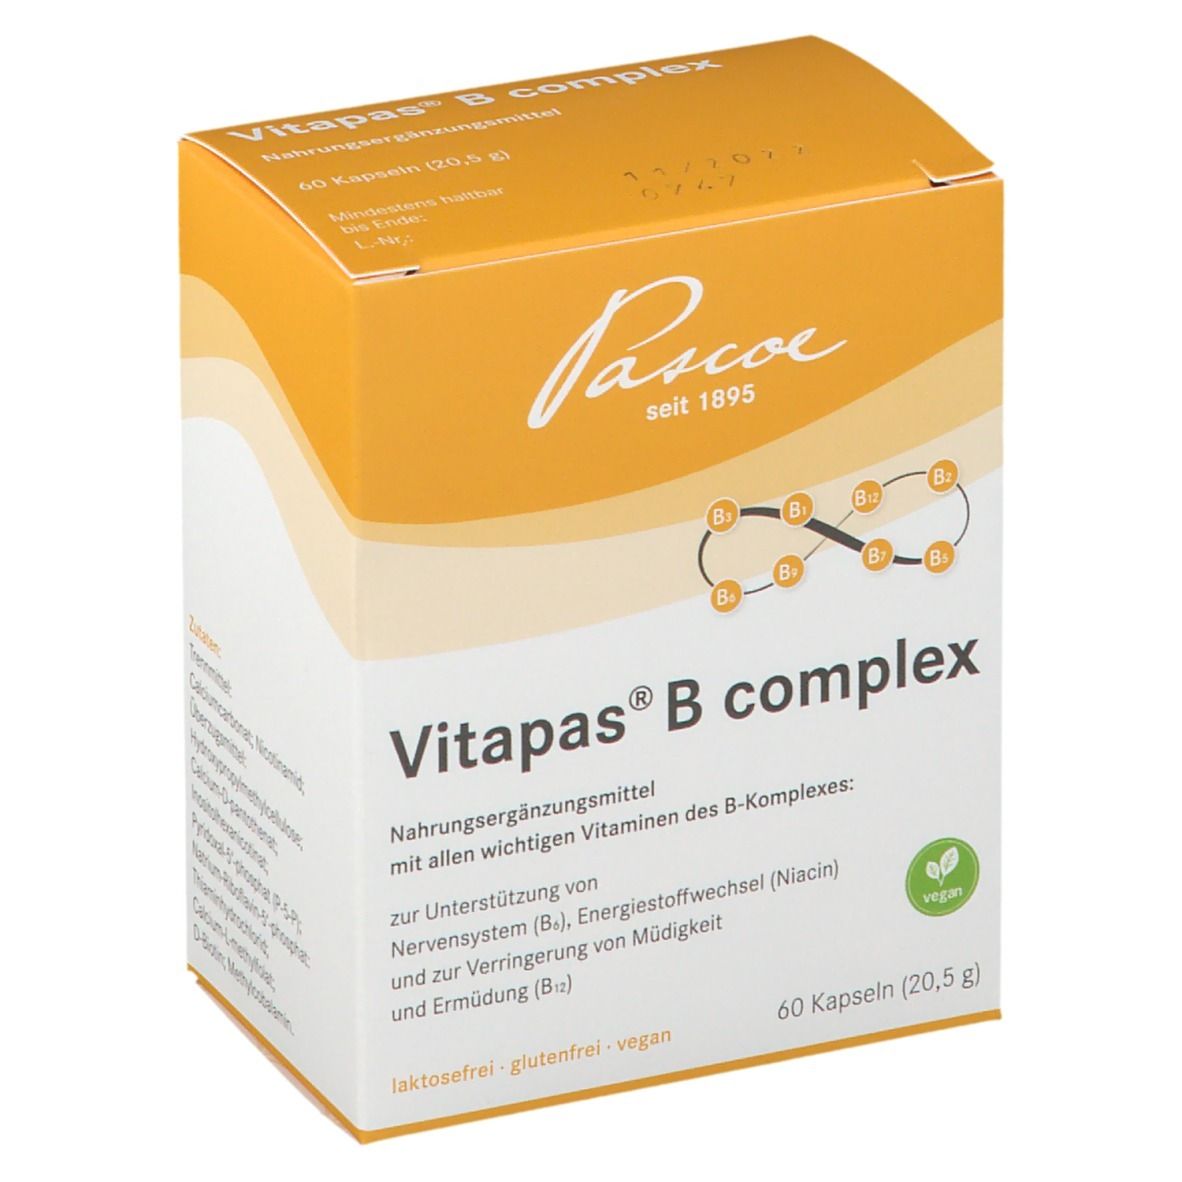 Image of Vitapas® B complex